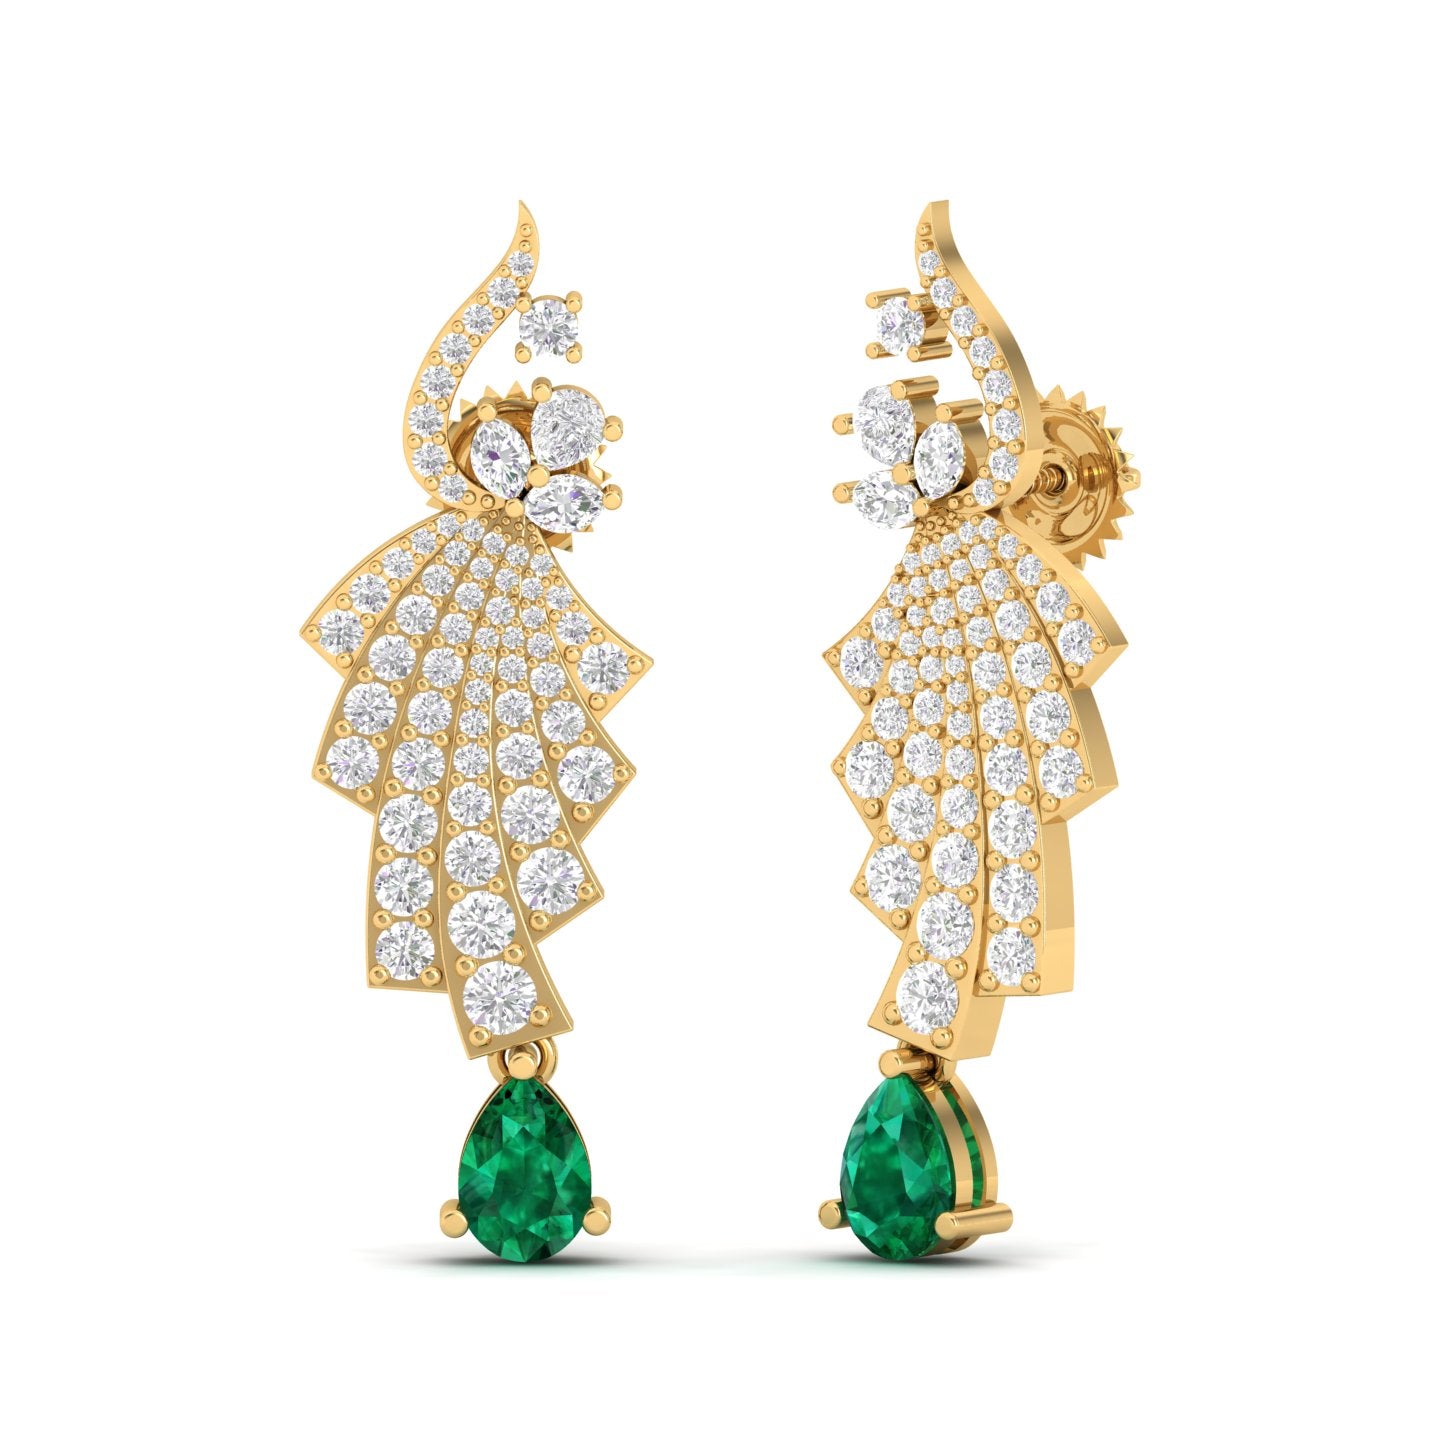 Maurya Leap Drop Earrings with Emerald and Diamonds